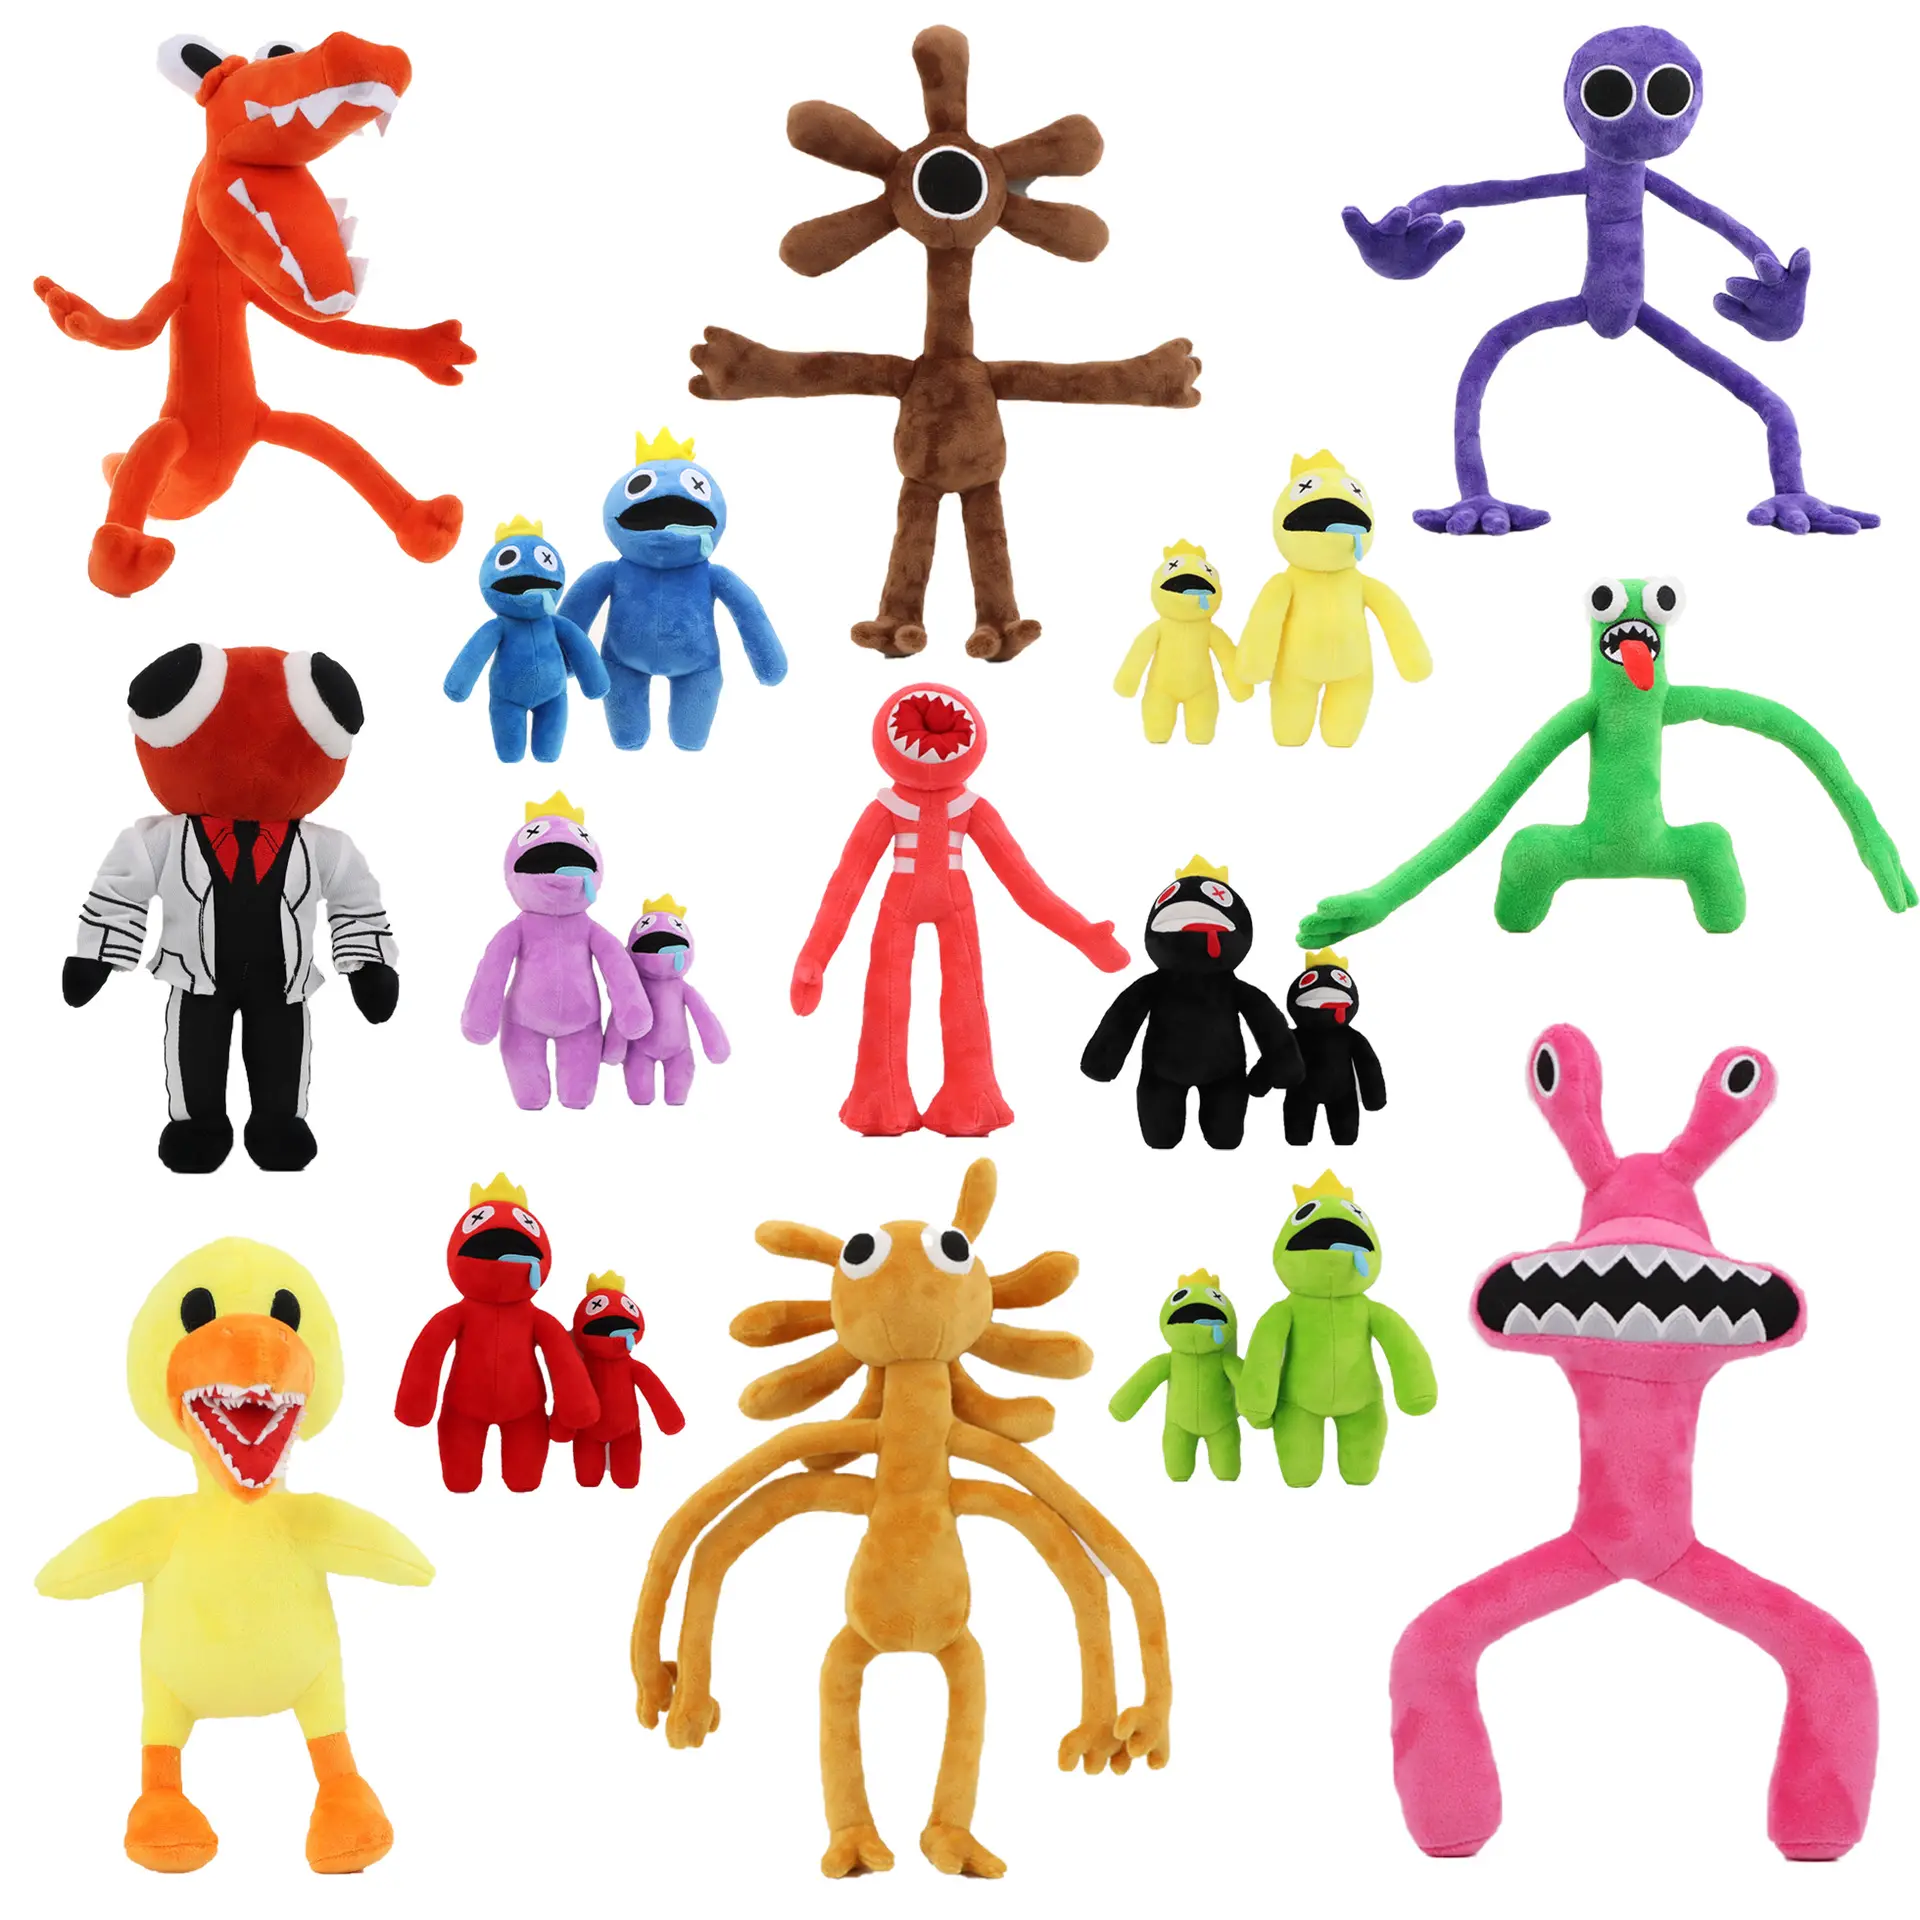 Rainbow Friends Plush Toy Cartoon Game Character Doll Kawaii Blue Monster Soft Stuffed Animal Toys Halloween Gift